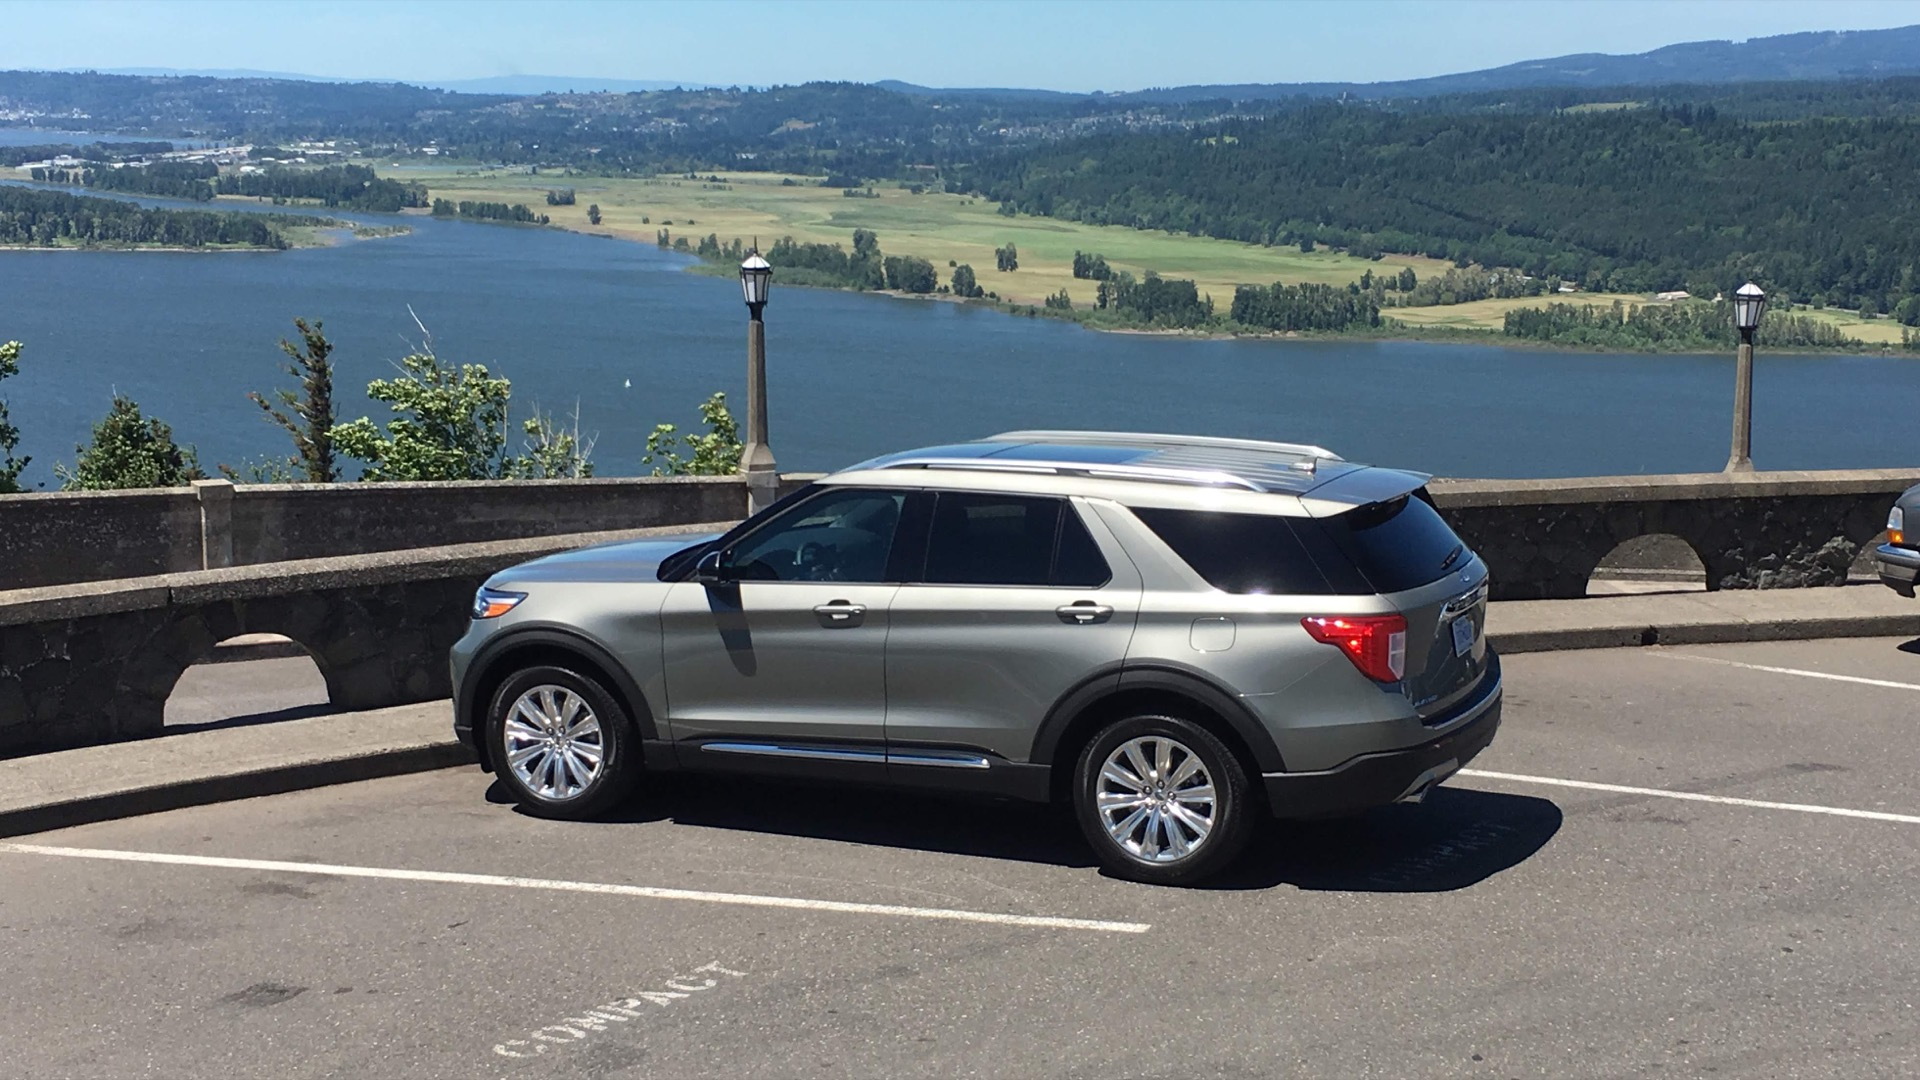 2020 Ford Explorer Hybrid  -  First Drive  -  Portland OR, June 2019